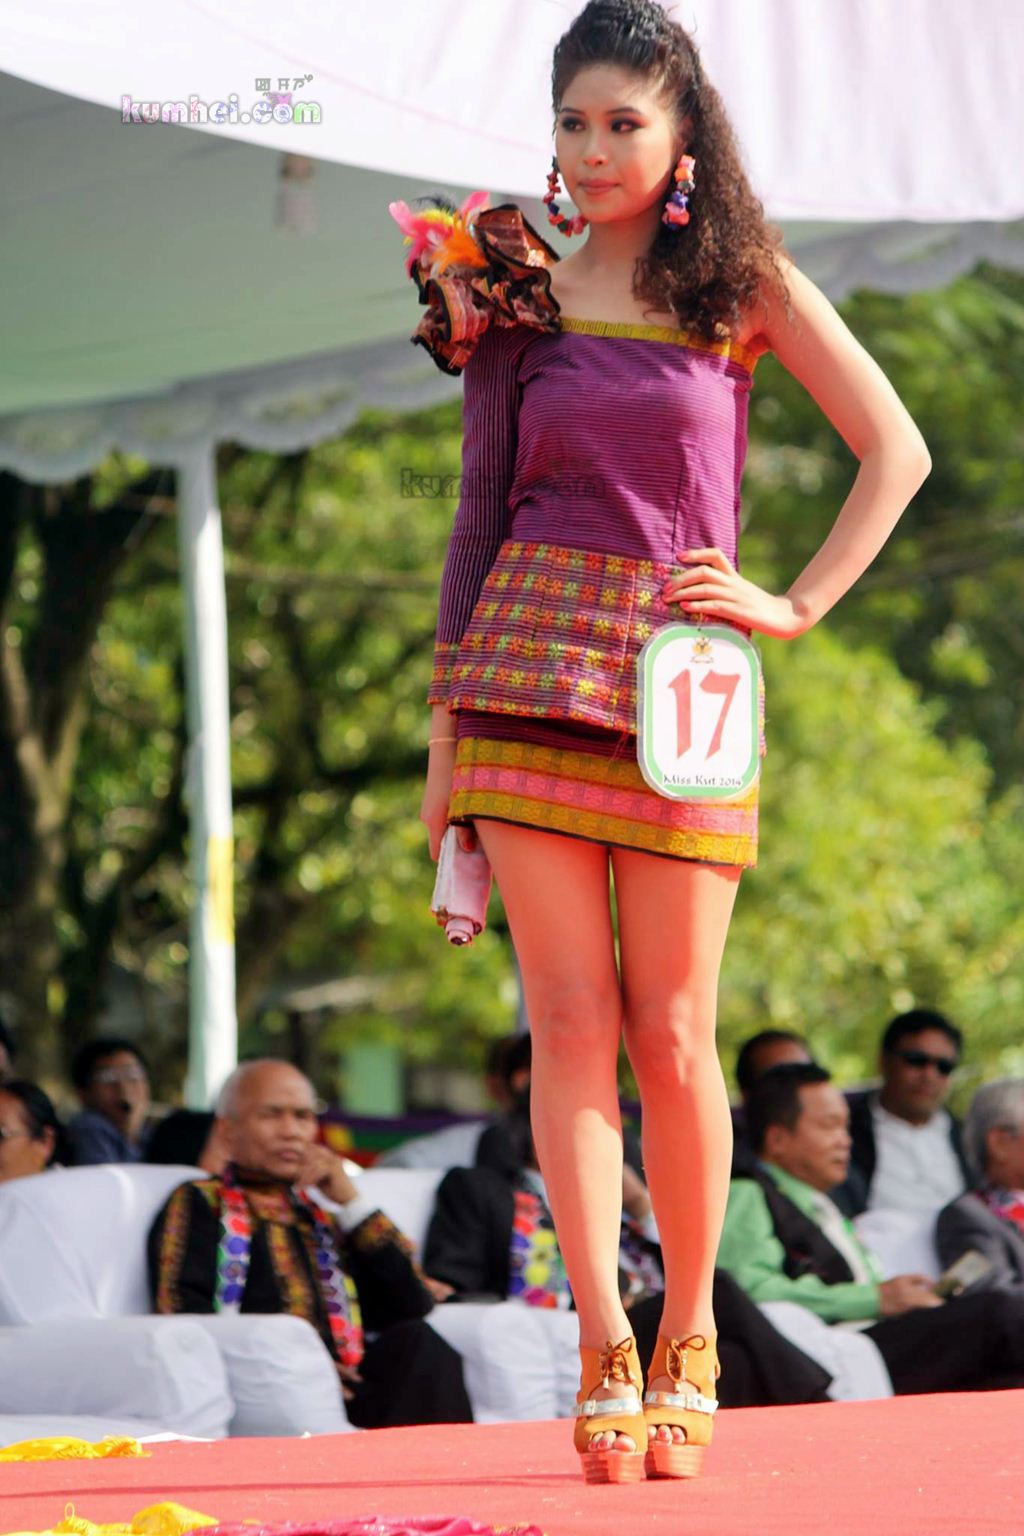 Vice nails 'kumot-kumotan' fashion on 'Tawag' finals